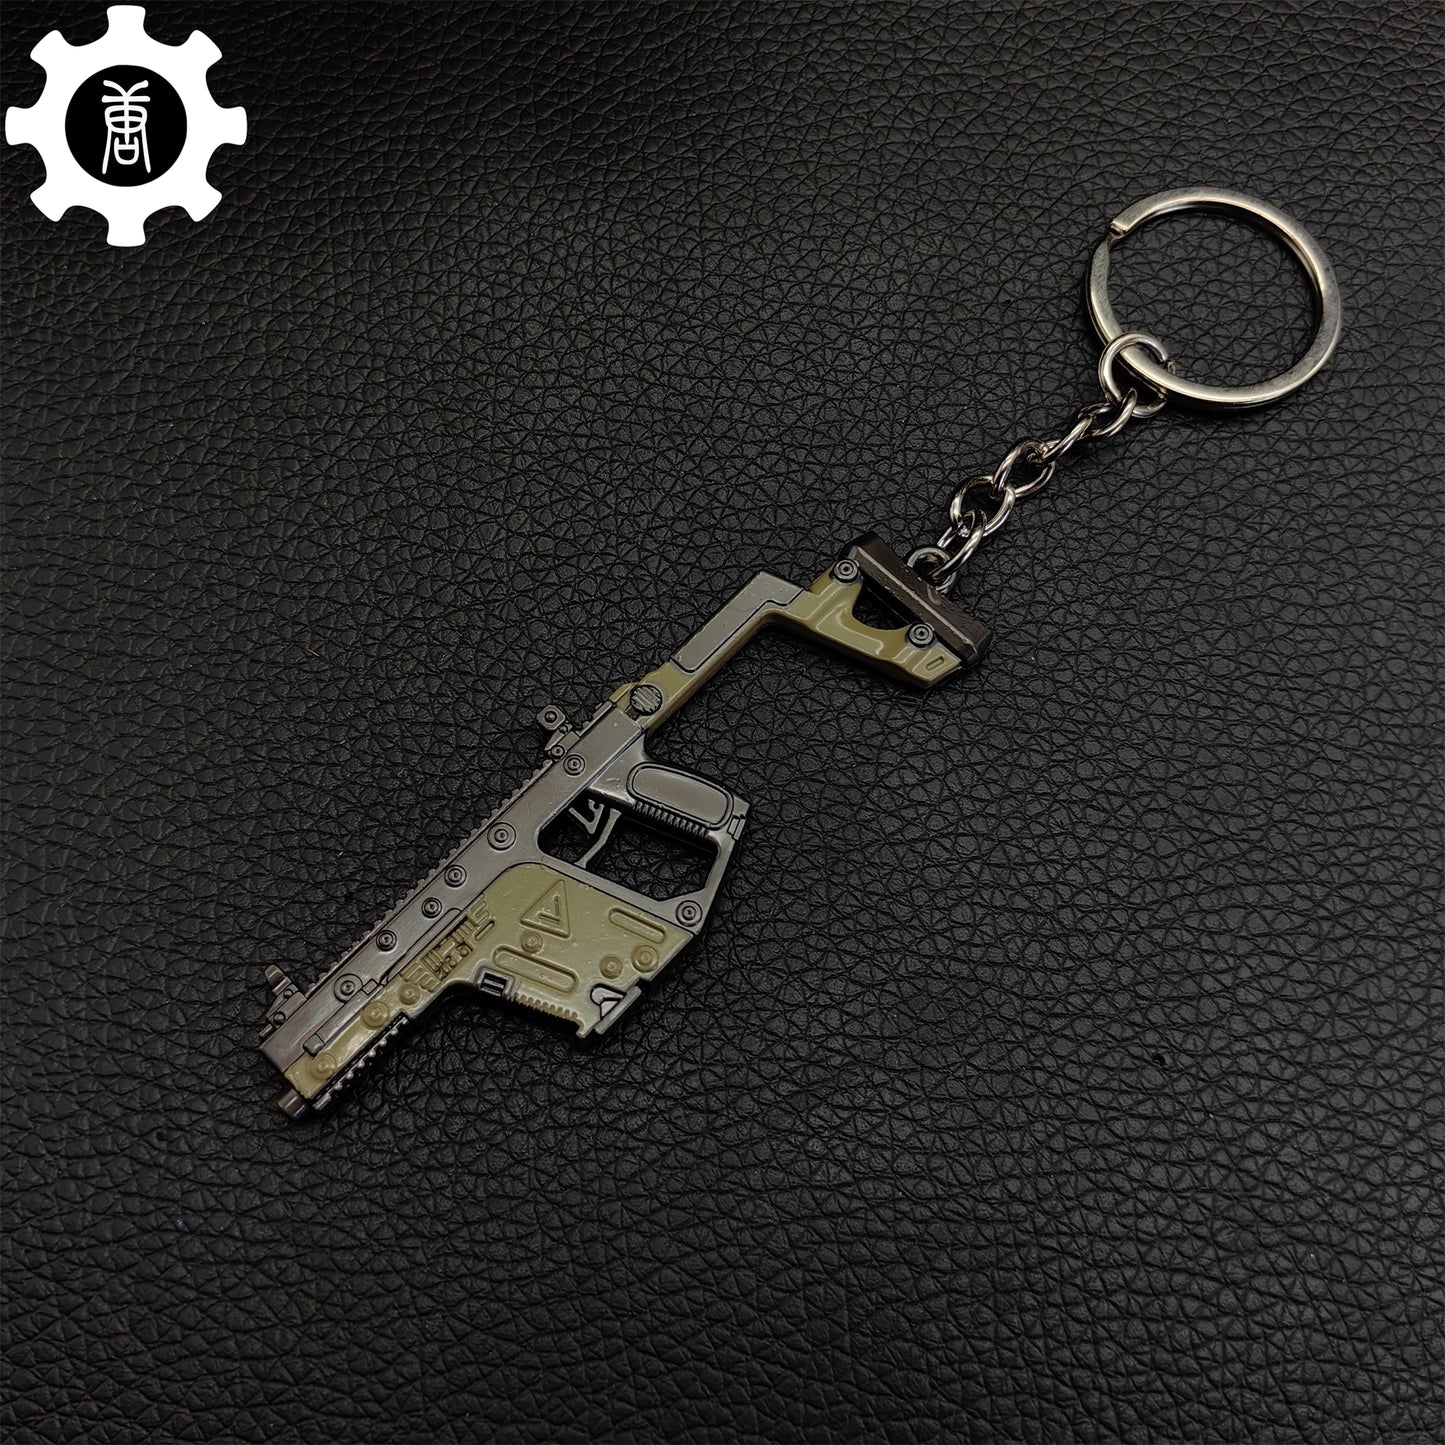 Mini KRISS Vector Submachine Gun Metal Keychain